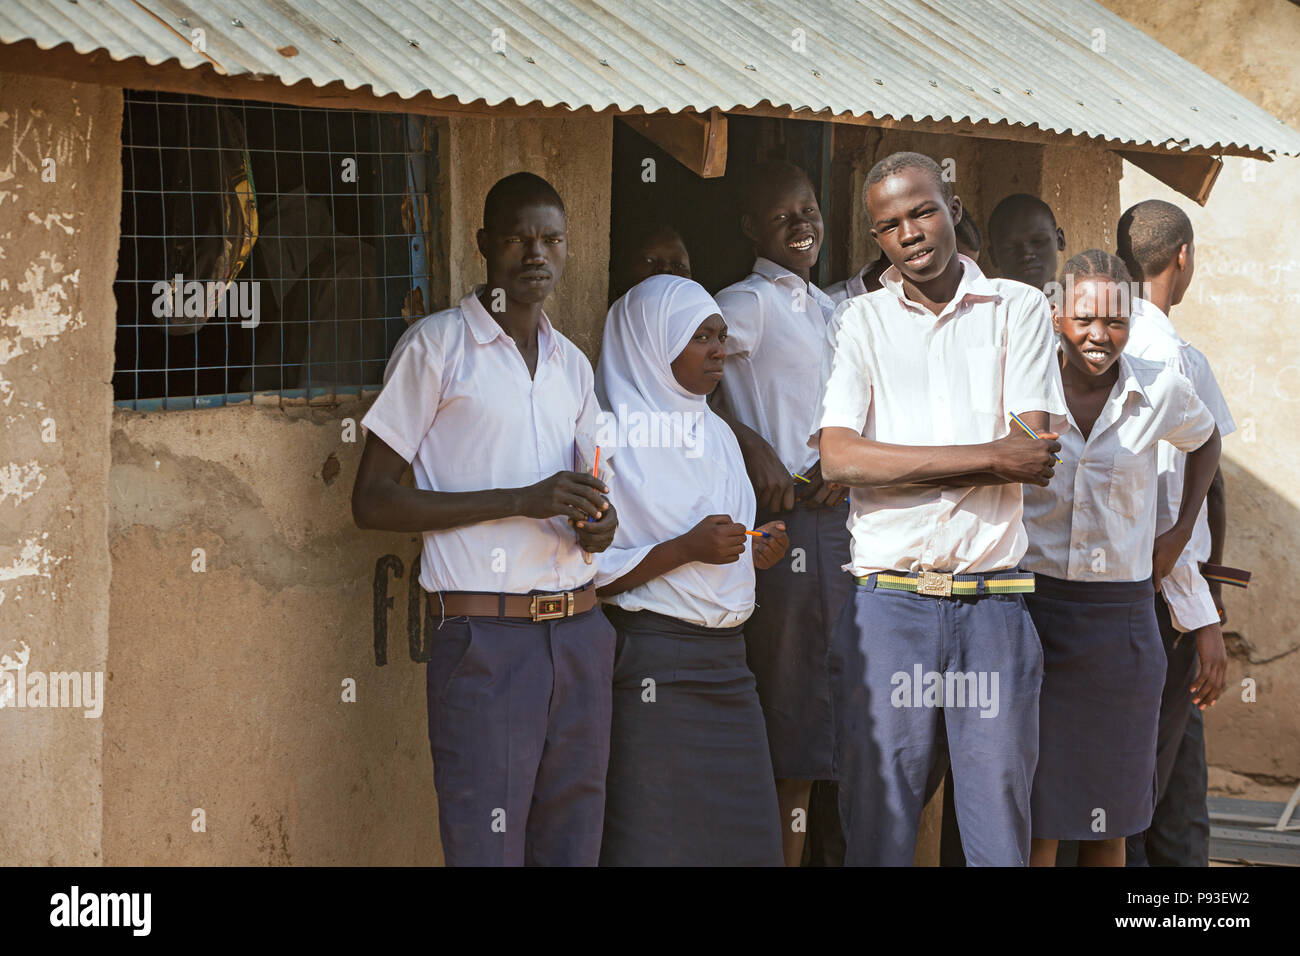 Kakuma, Kenya - Students stand in front of a school building in the Kakuma refugee camp. Stock Photo